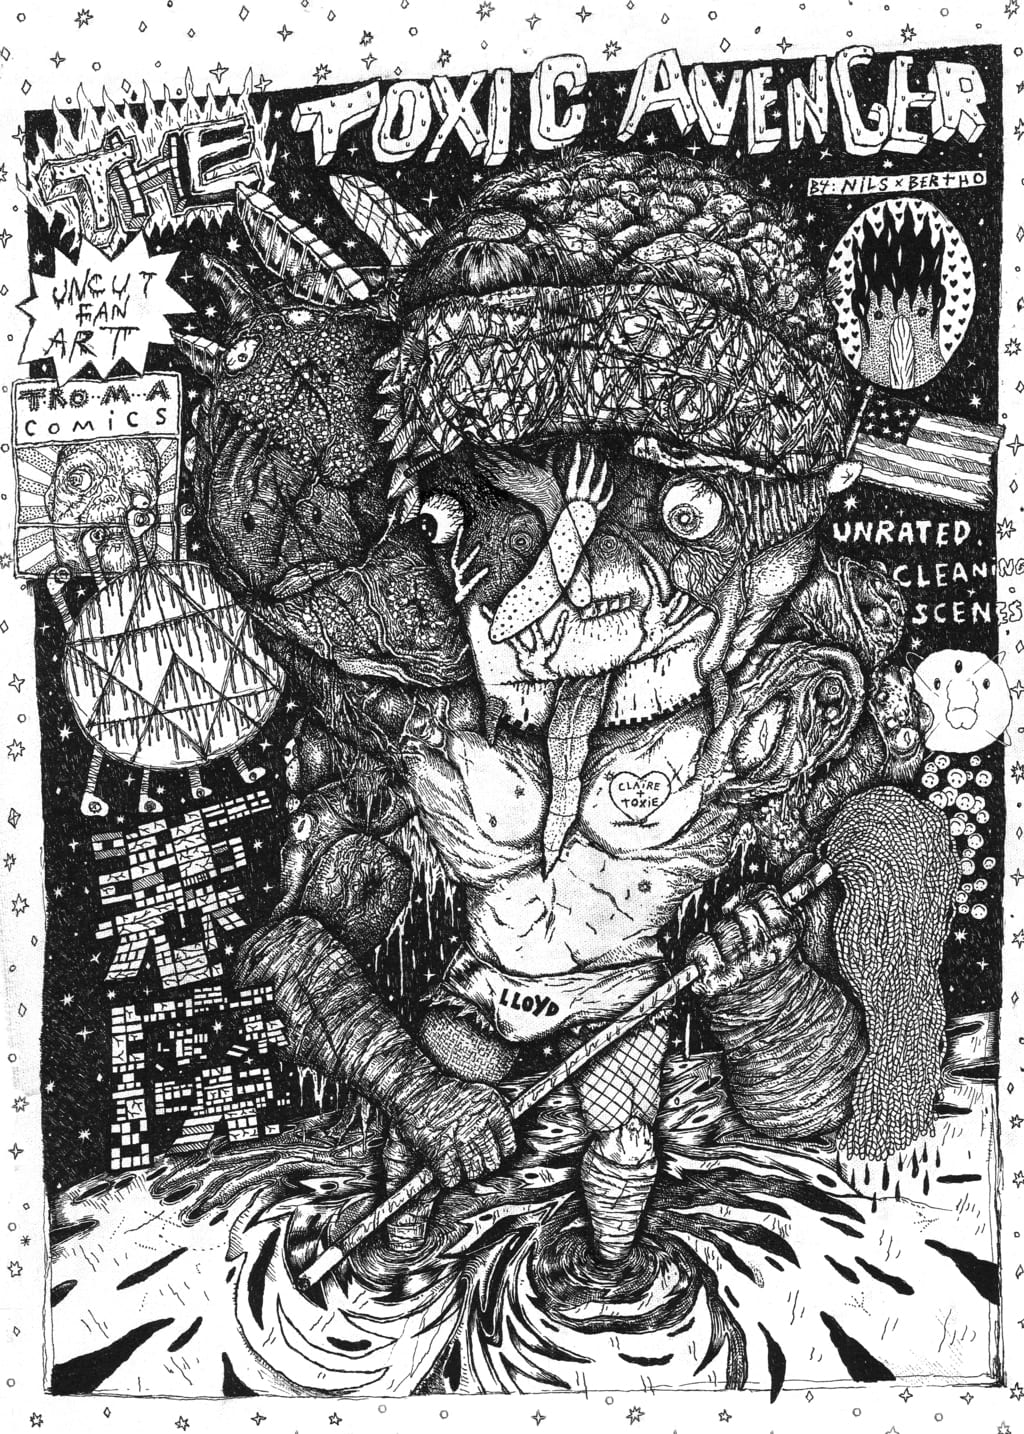 nils-bertho-artiste-underground-dessin-tableau-oeuvre-rottring-art-créature-monstre-imaginaire-figuratif-minutieux-original